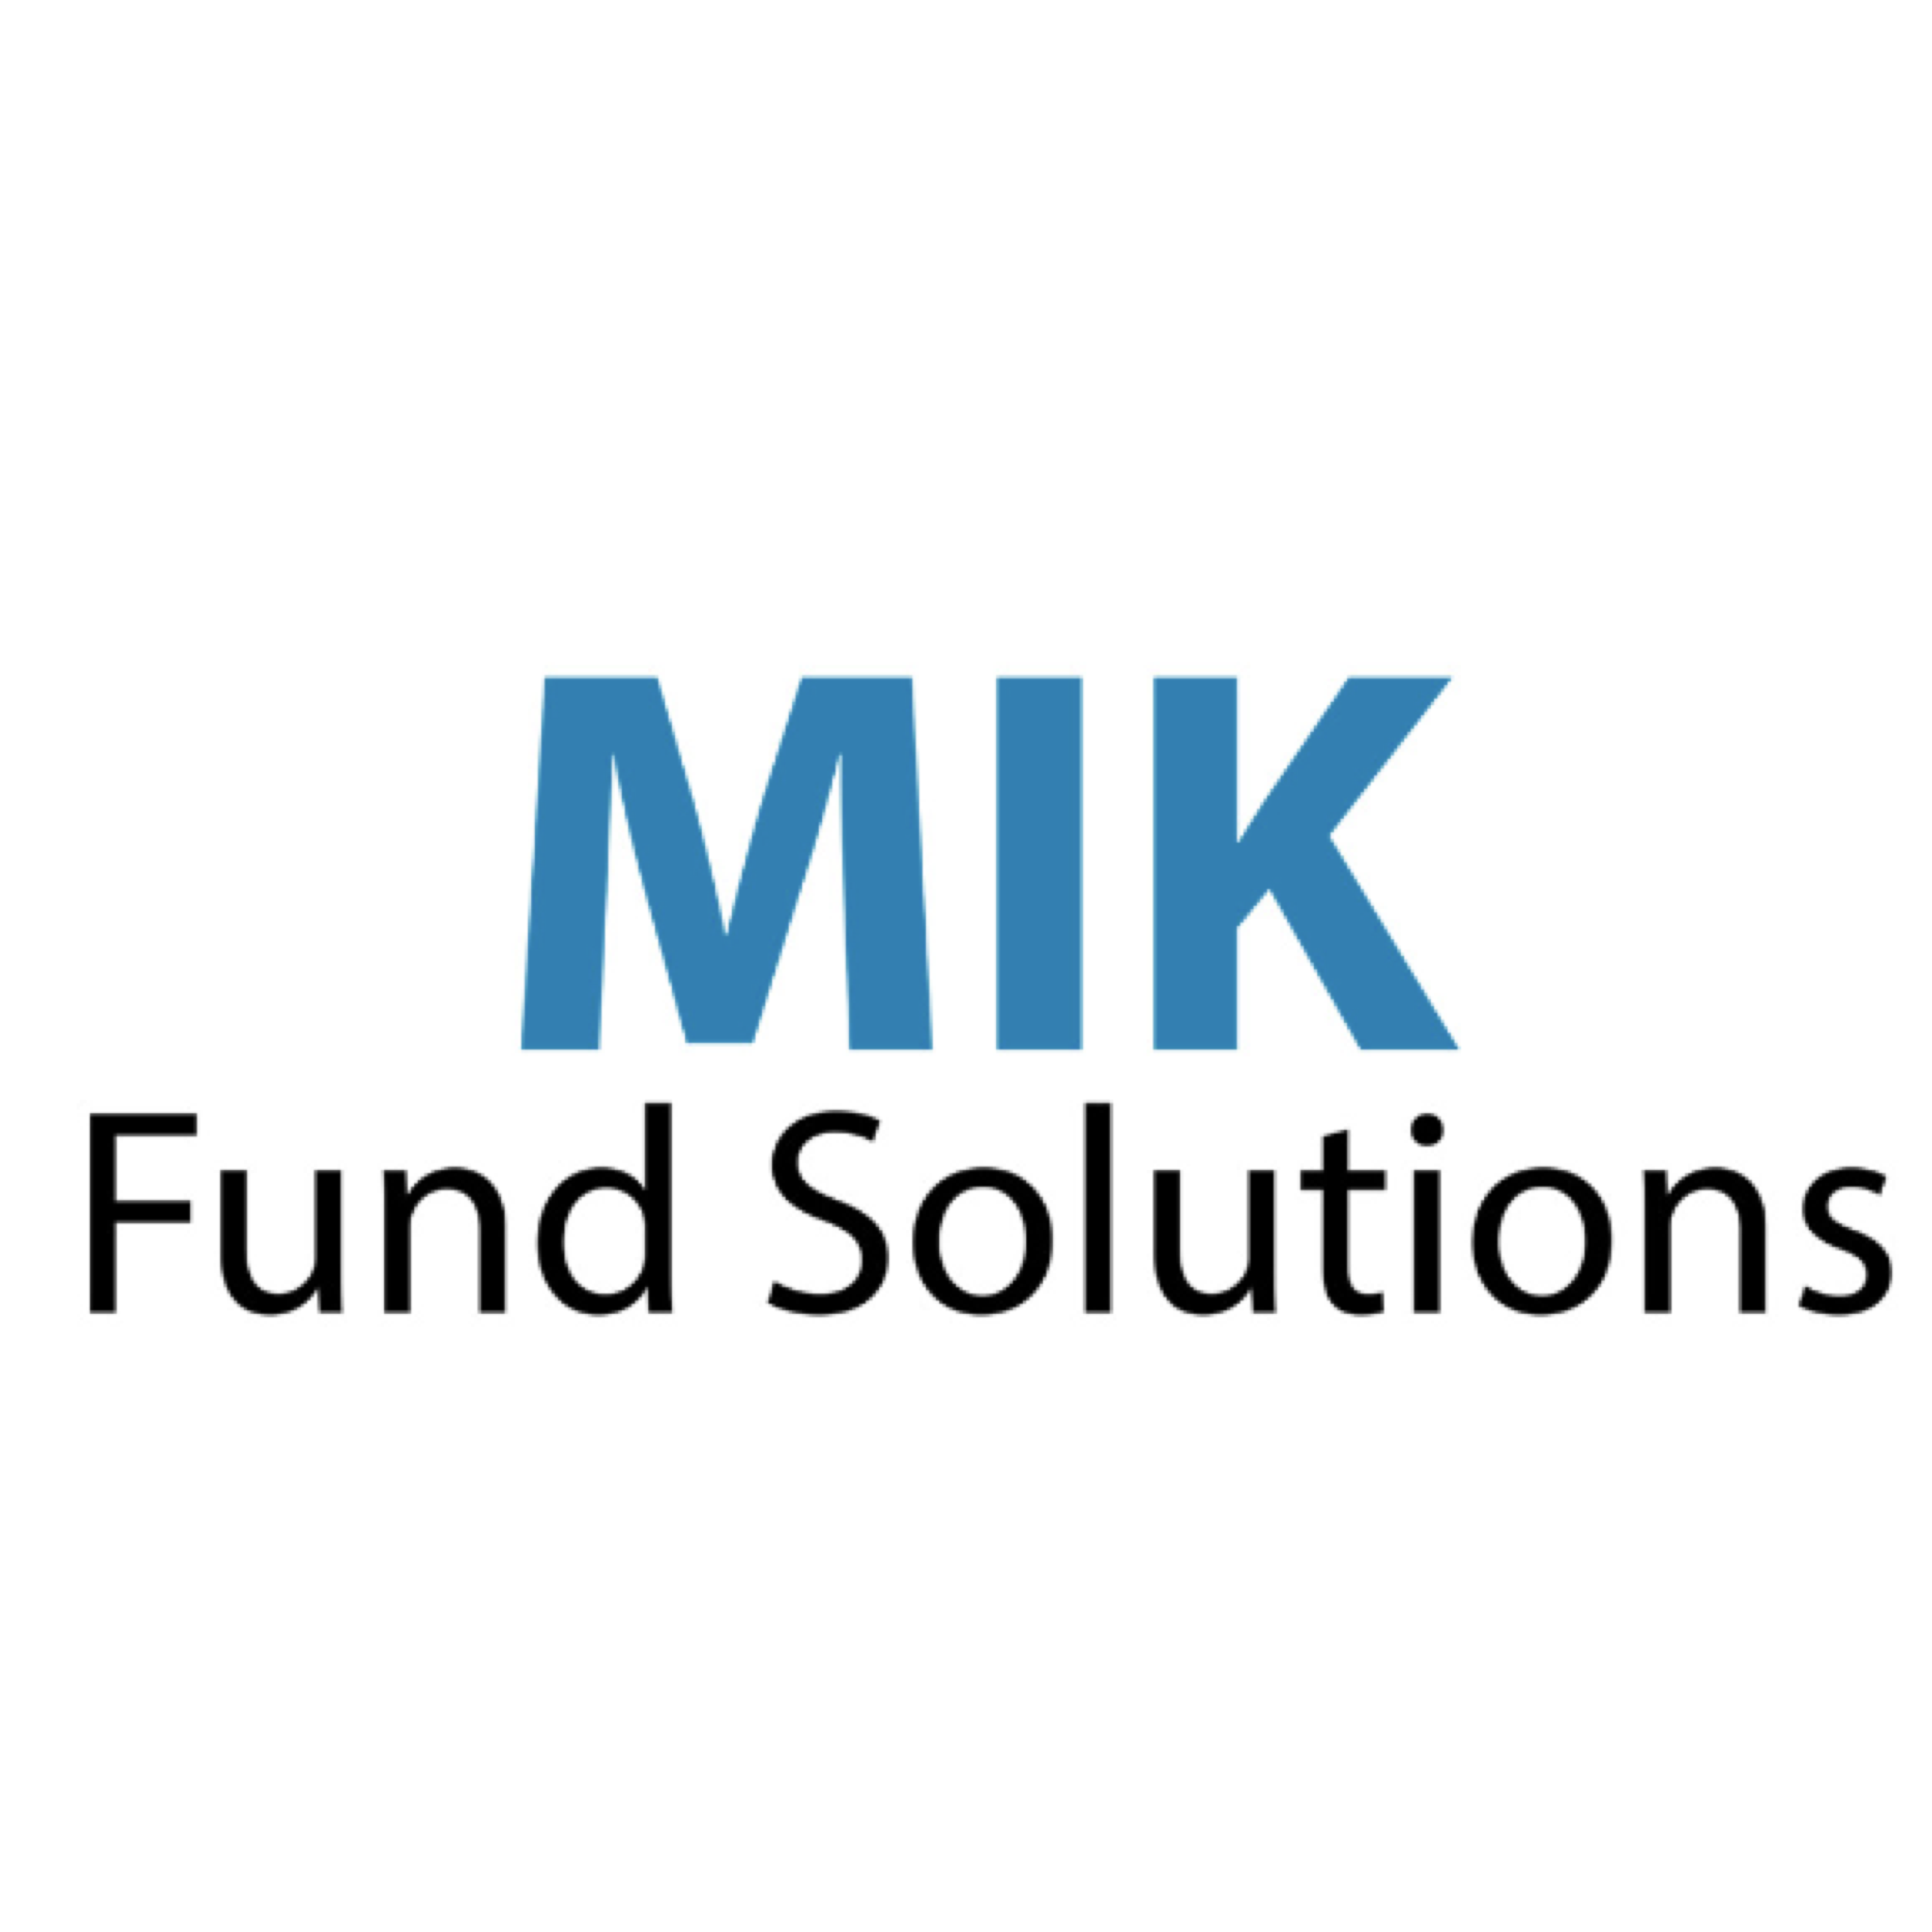 MIK Fund Solutions